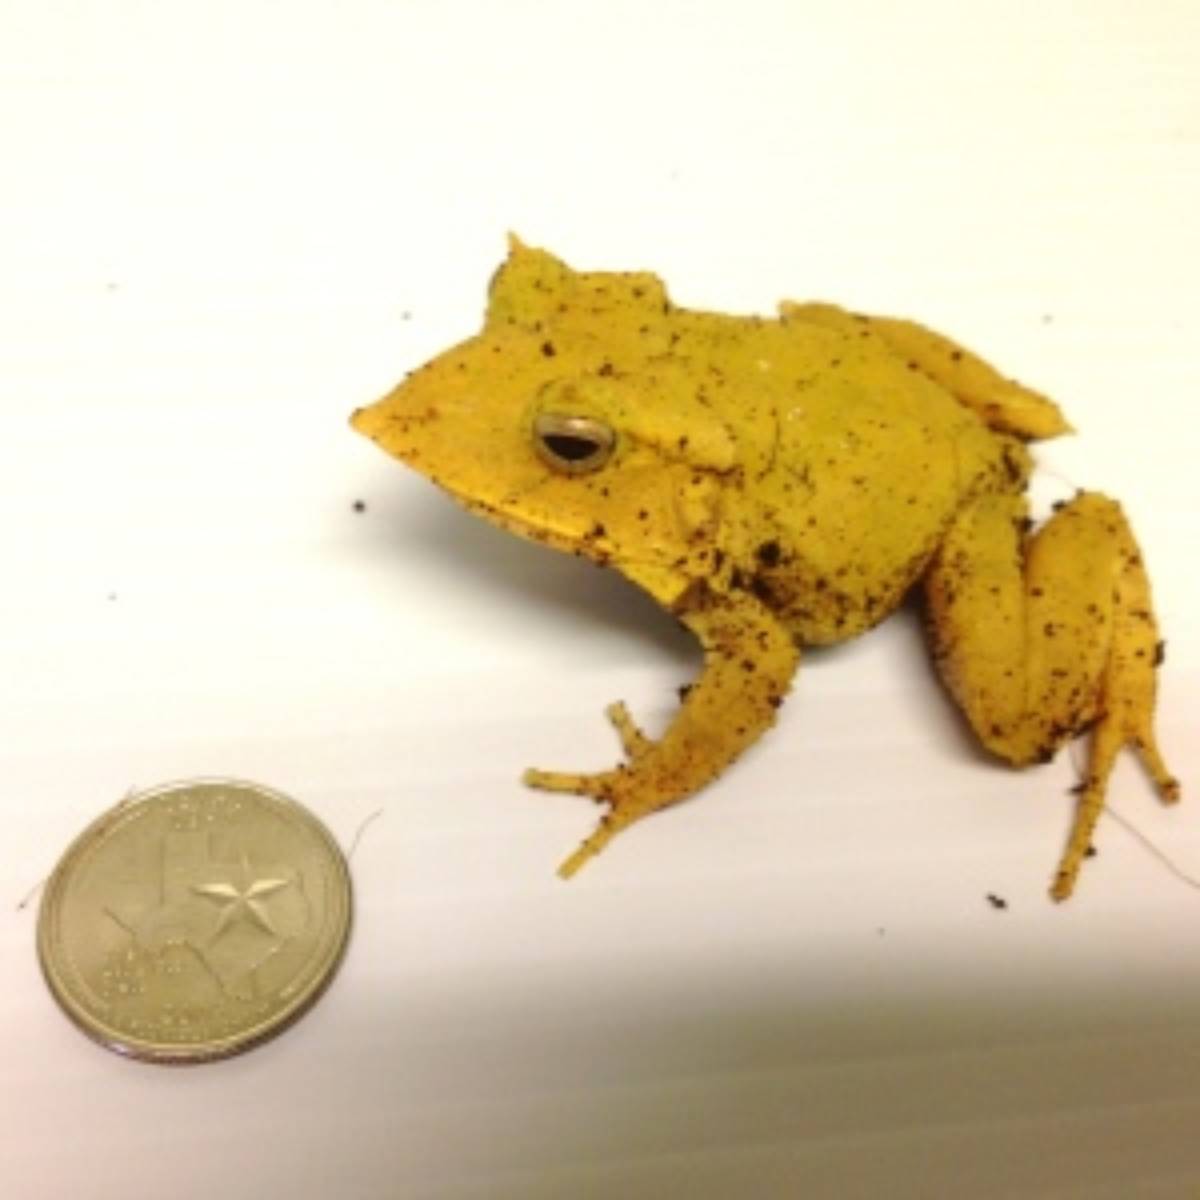 solomon island leaf frog adult